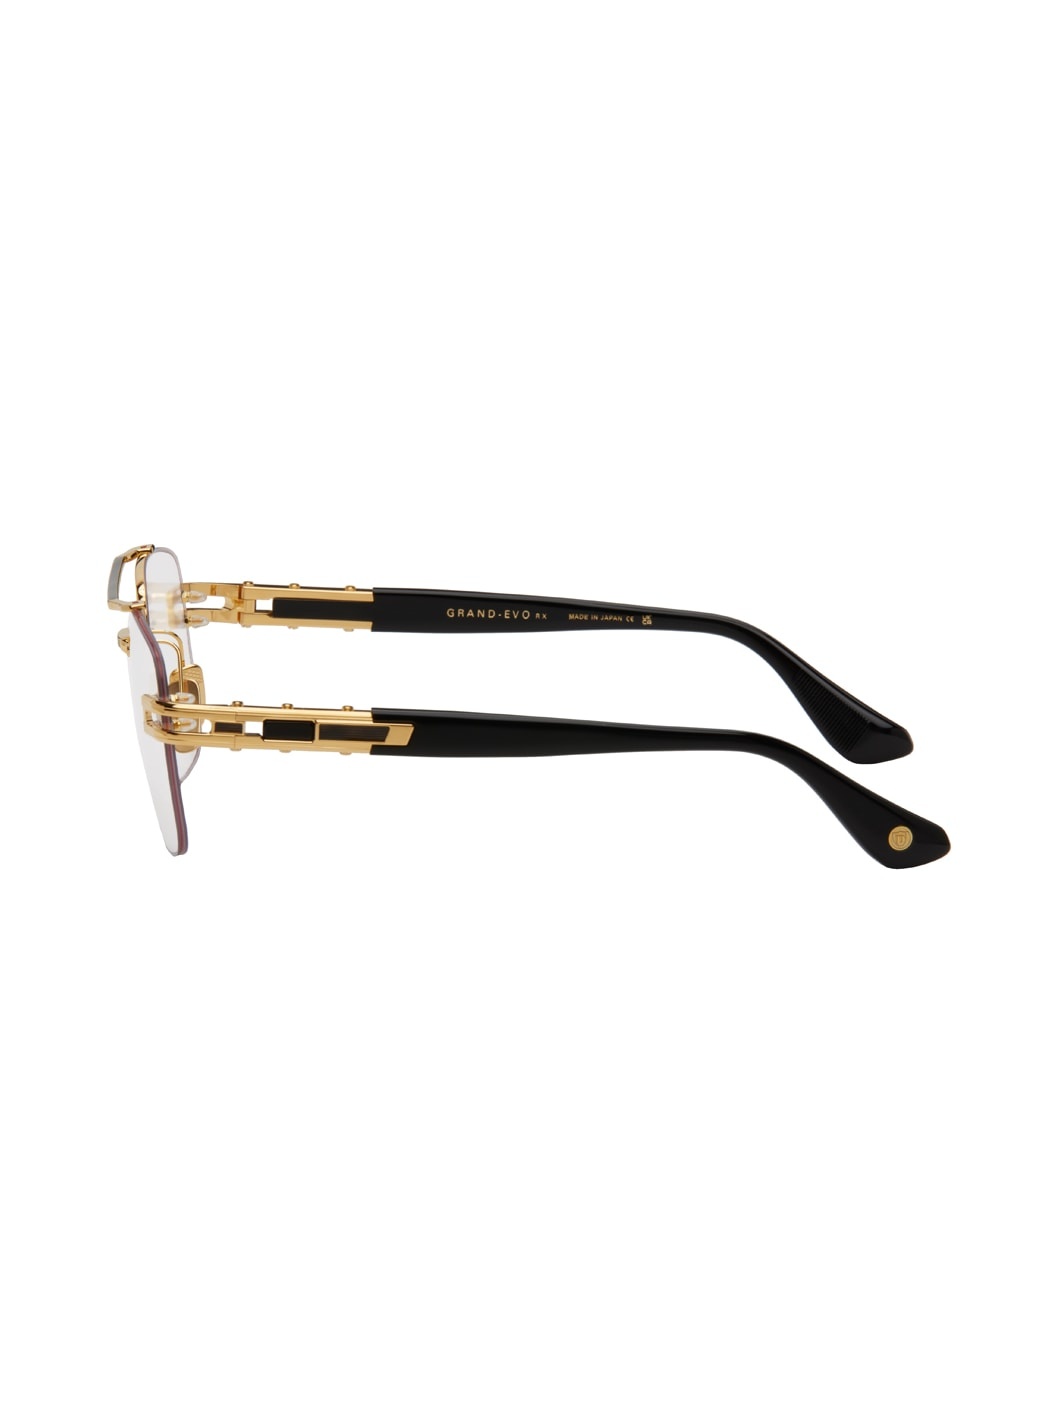 Gold Grand-Evo Rx Glasses - 3